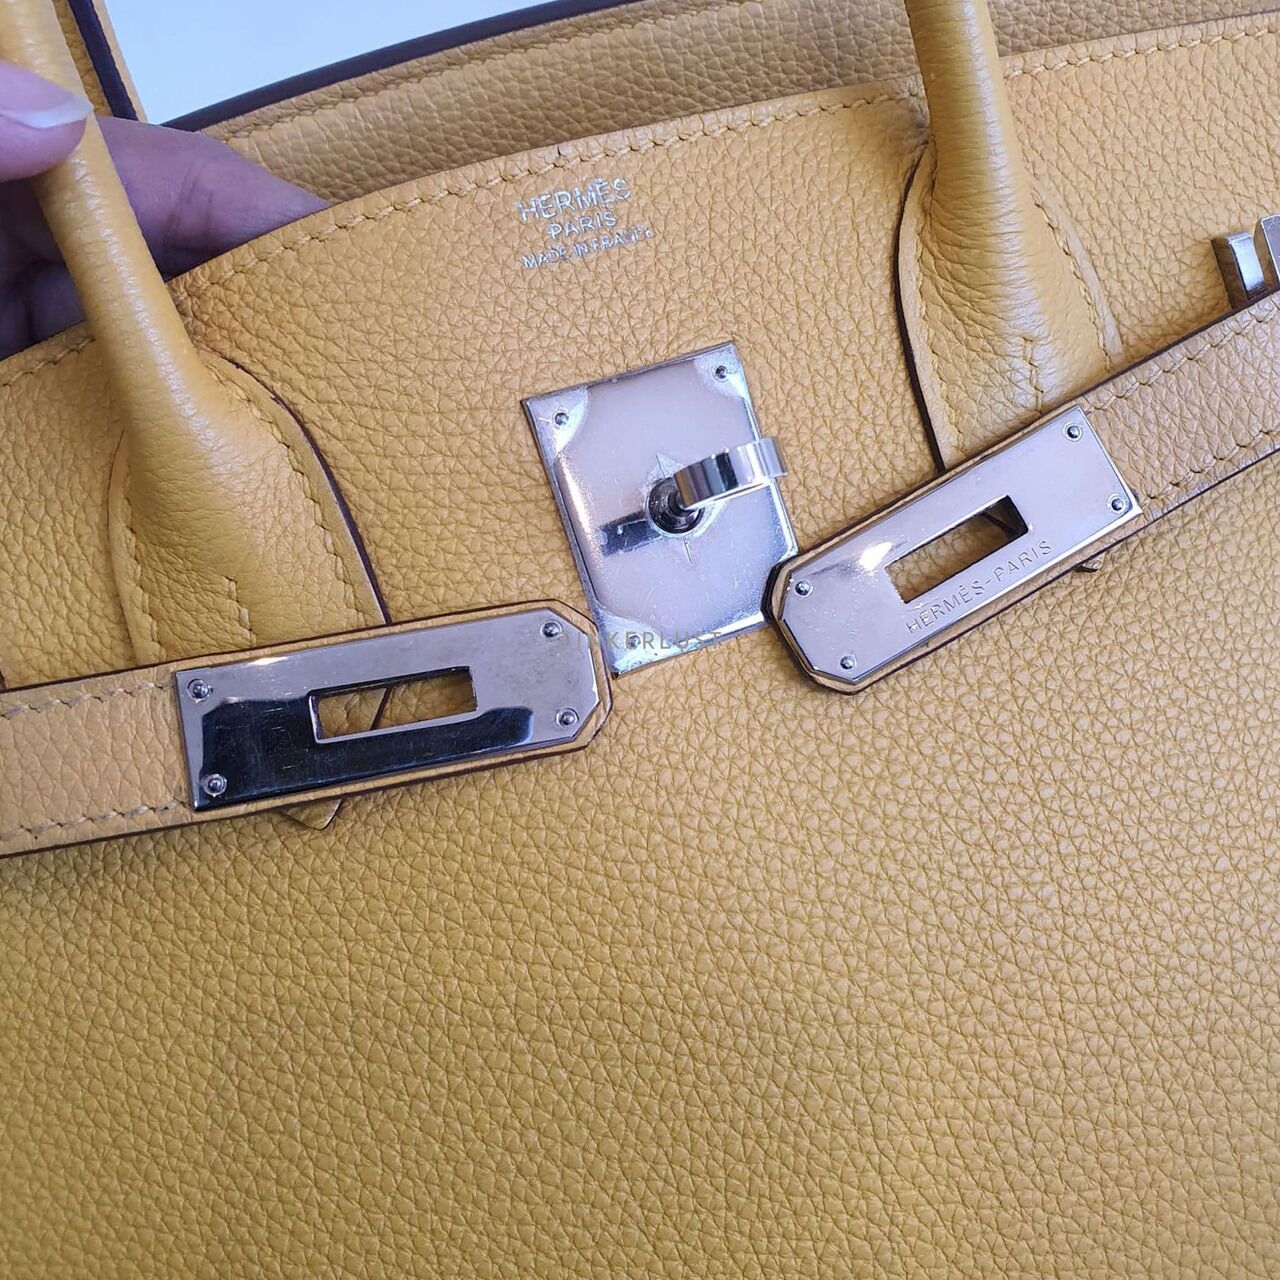 Hermes Birkin 30 Soleil M PHW Handbag 